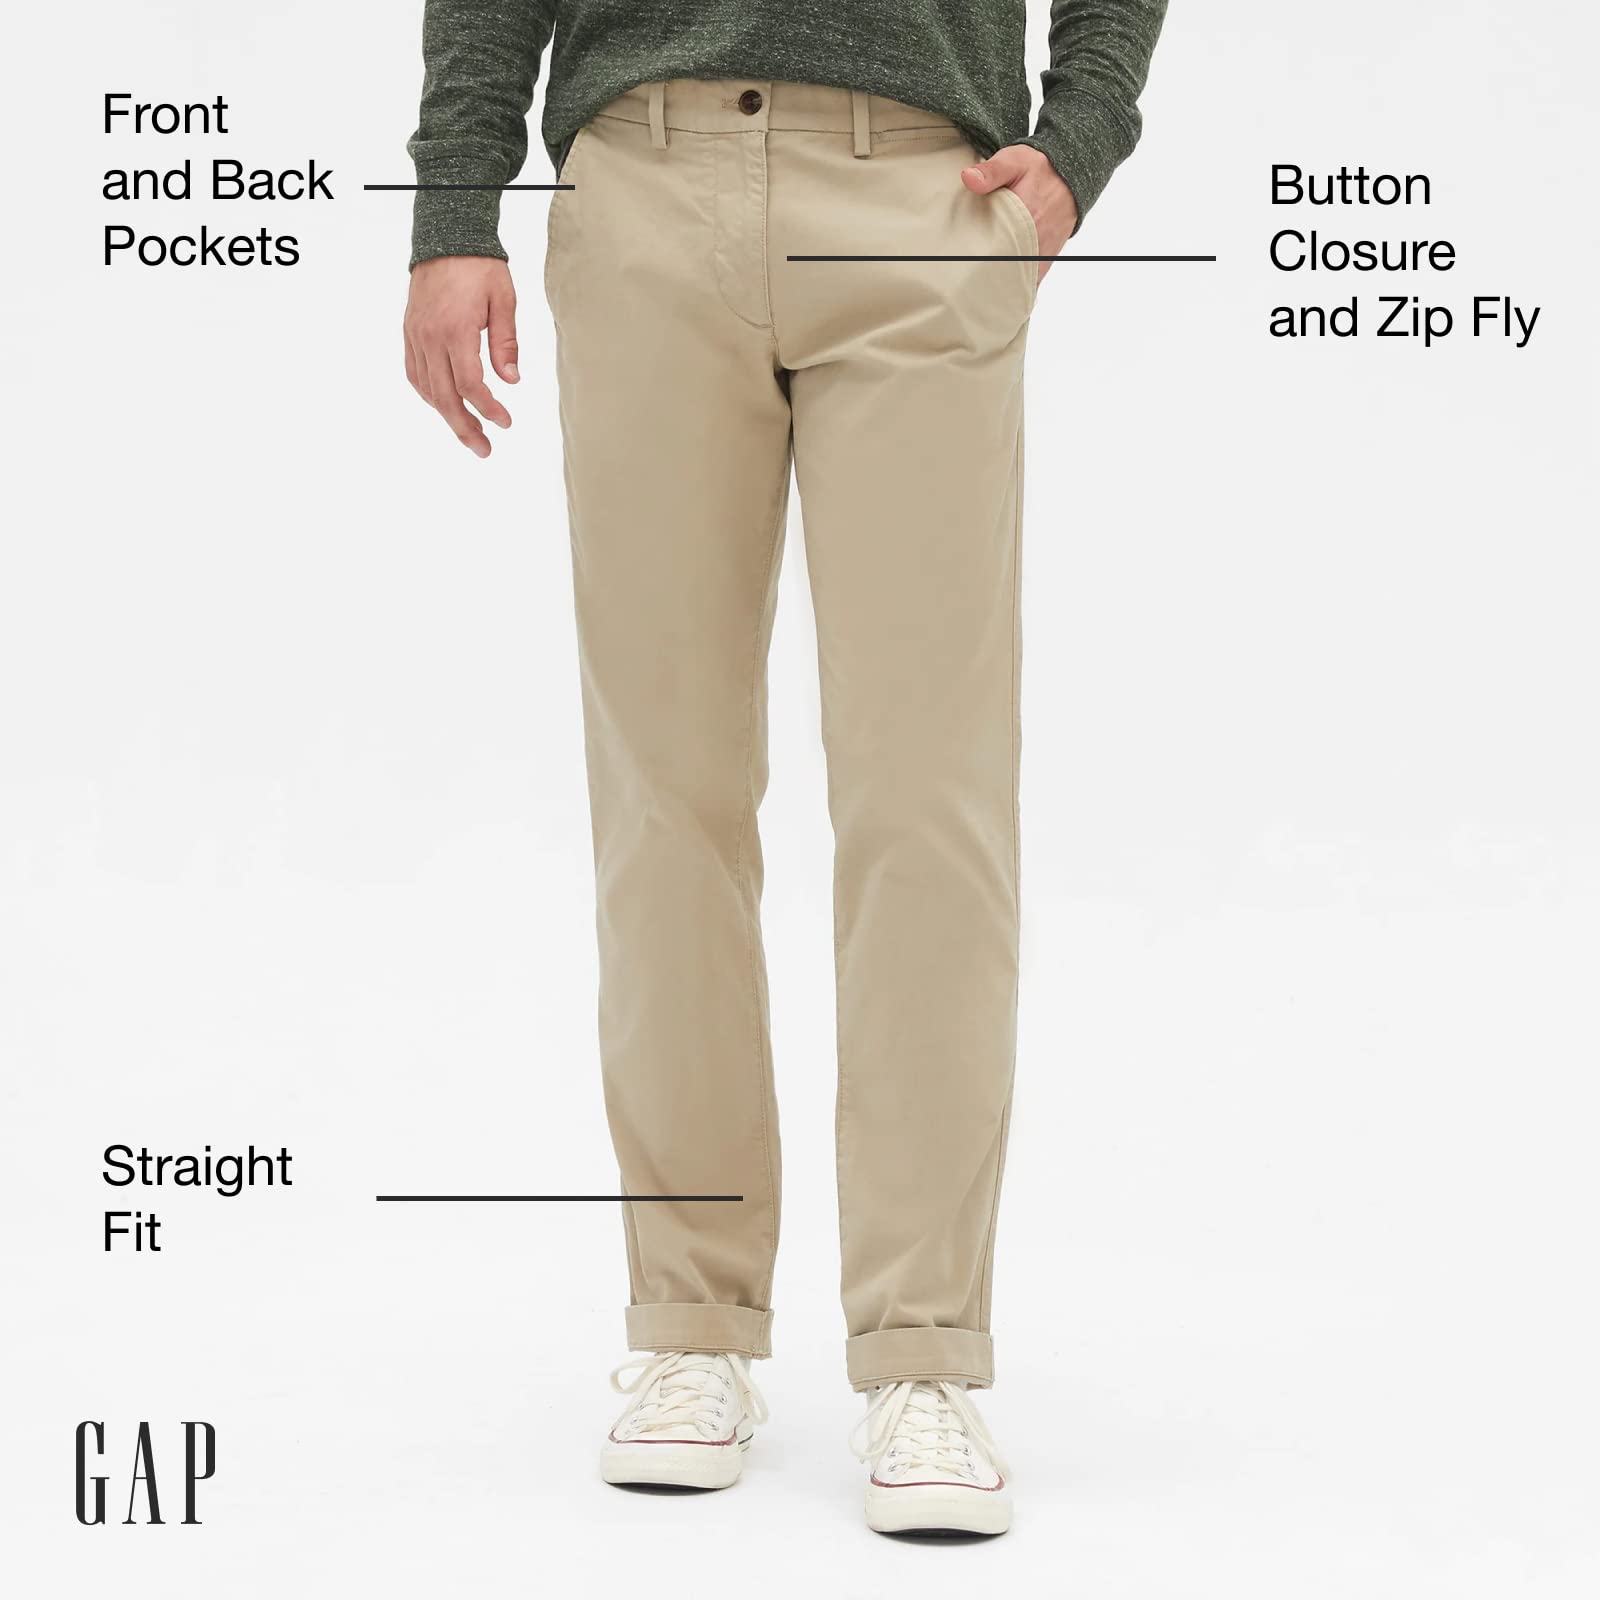 GAP Men's Essential Straight Fit Khaki Chino Pants